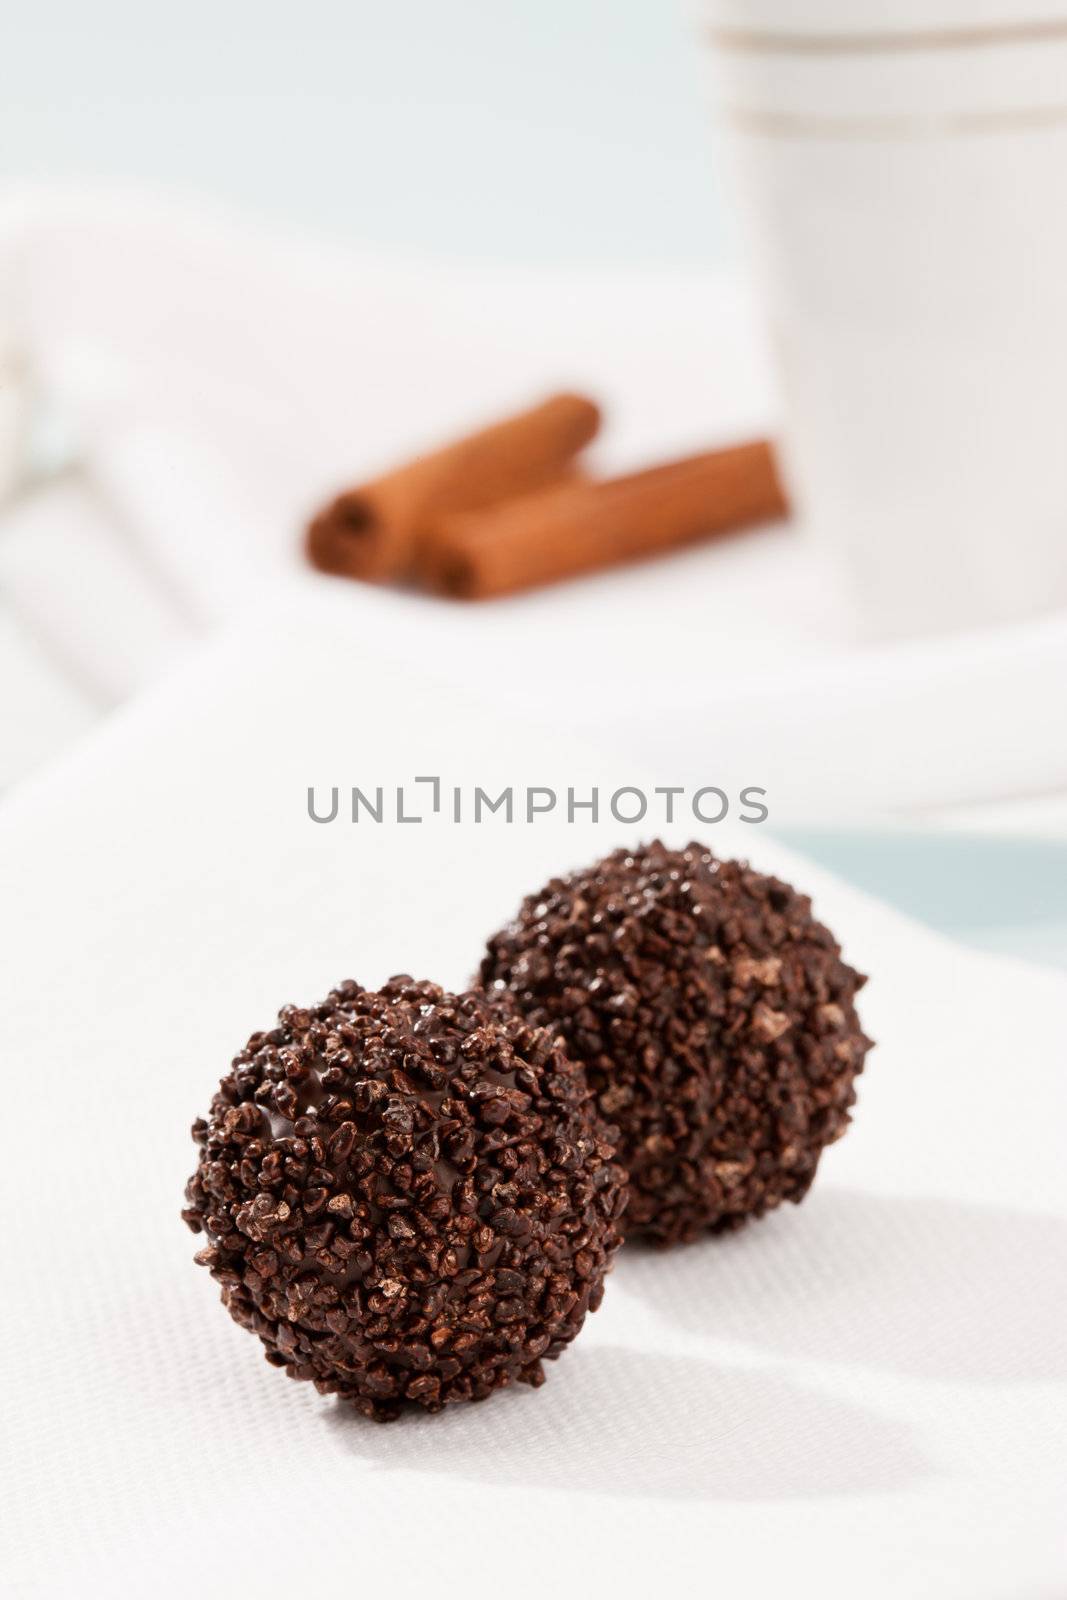 food series: tasty chocolate dessert with nuts